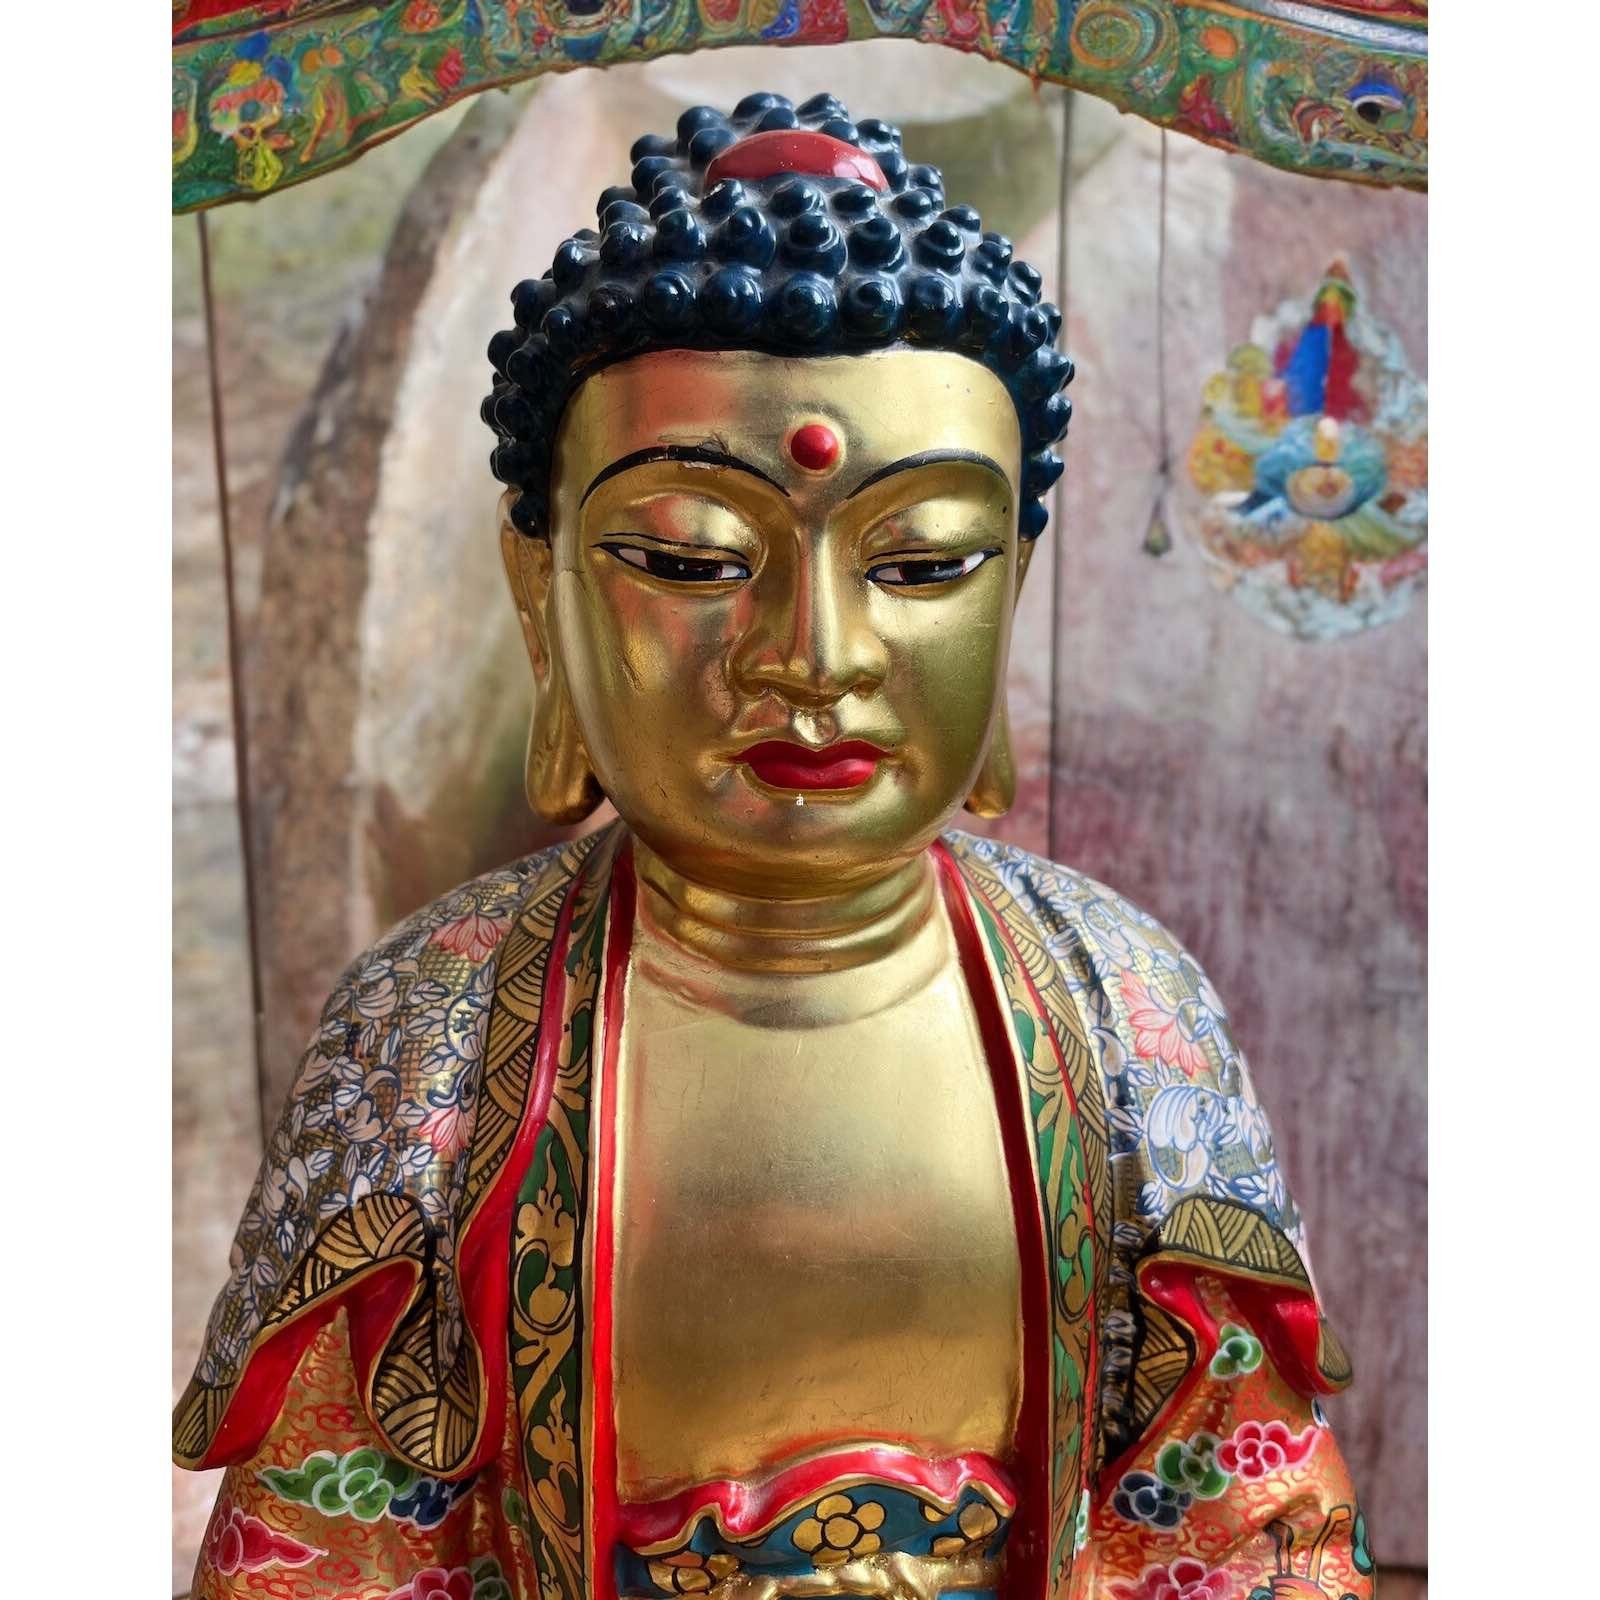 Tibet Figur Buddhafigur Bronze - Buddha Asien LifeStyle China Mudra Meditations